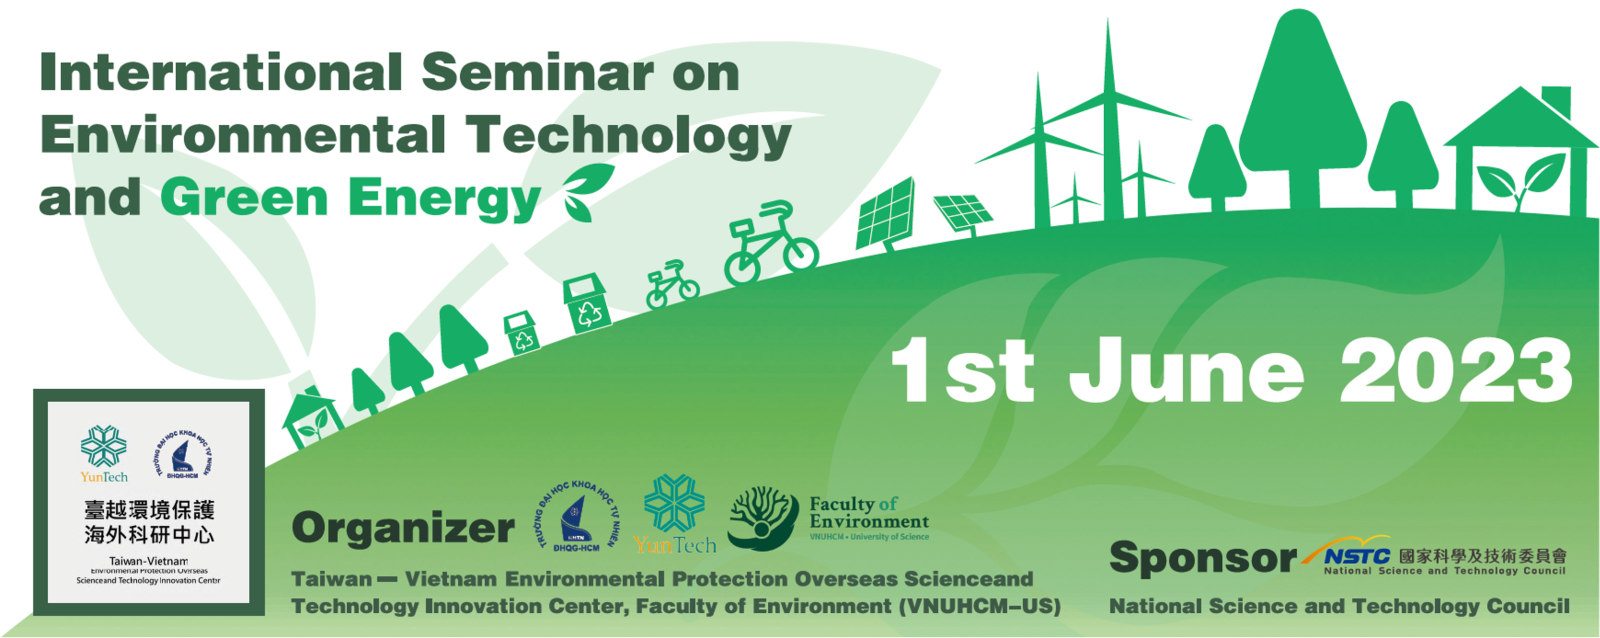 [img] International Seminar on Environmental Technology and Green Energy